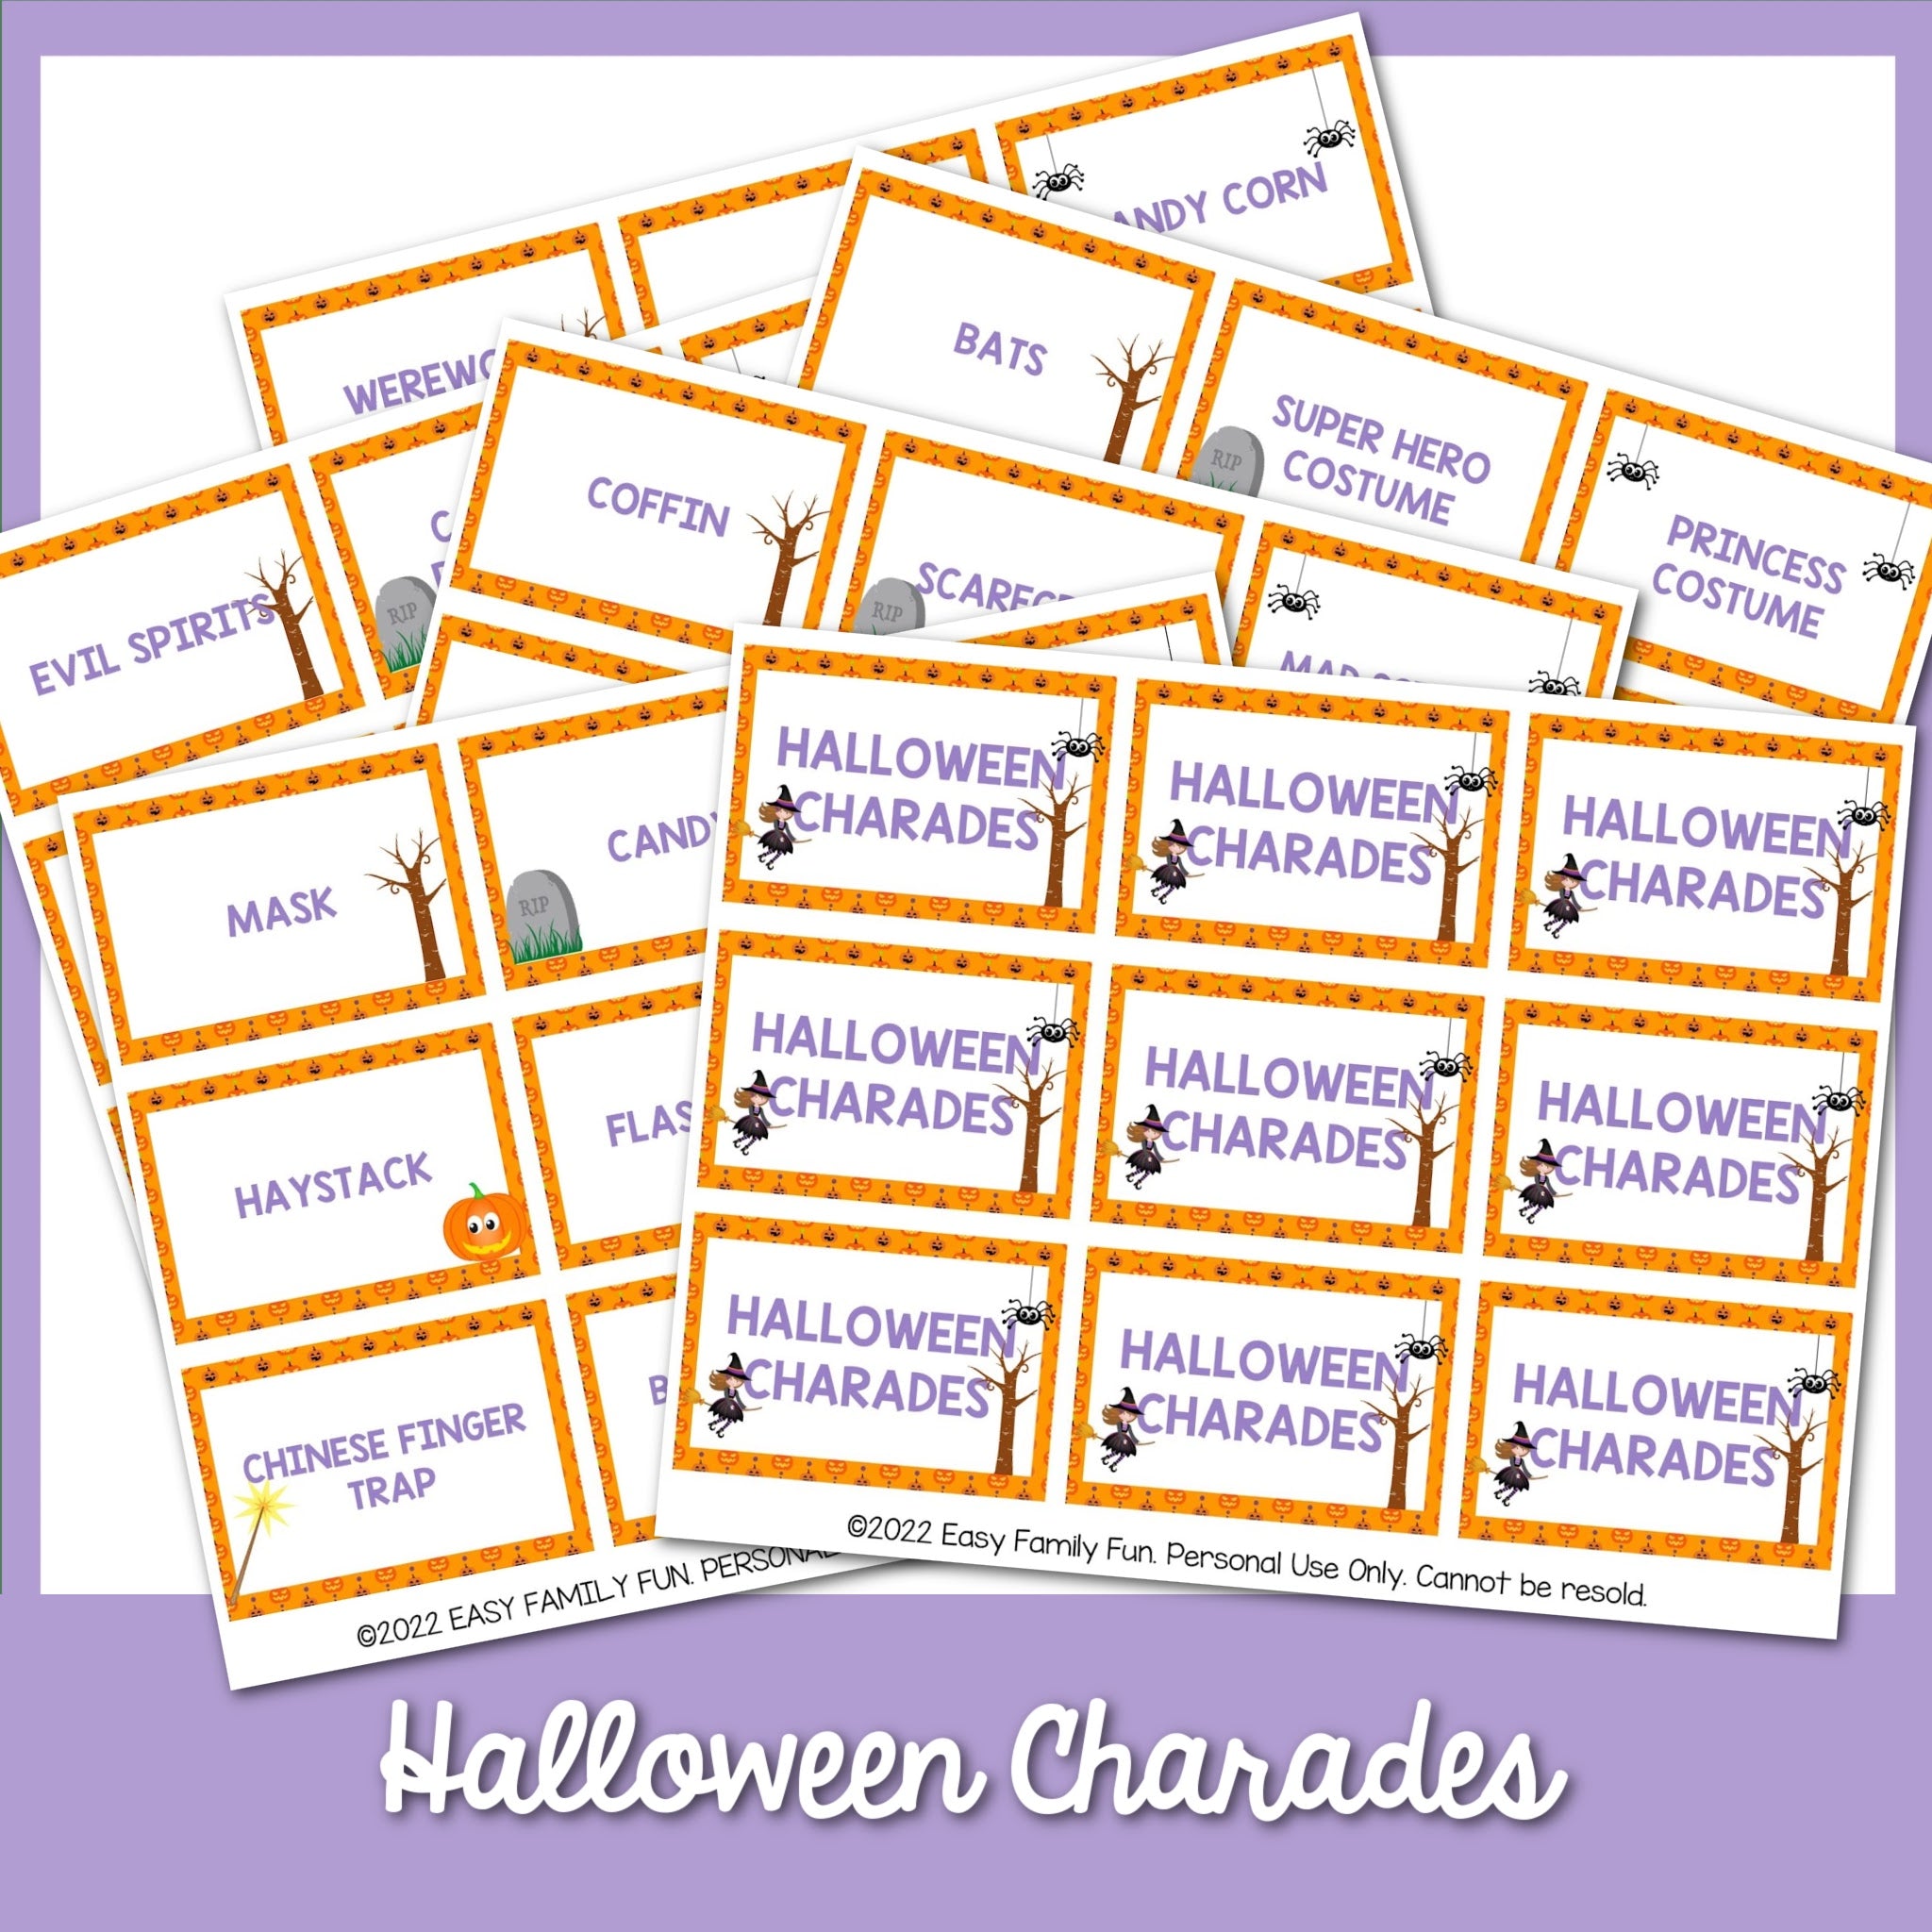 90 Halloween Charades Printable Cards